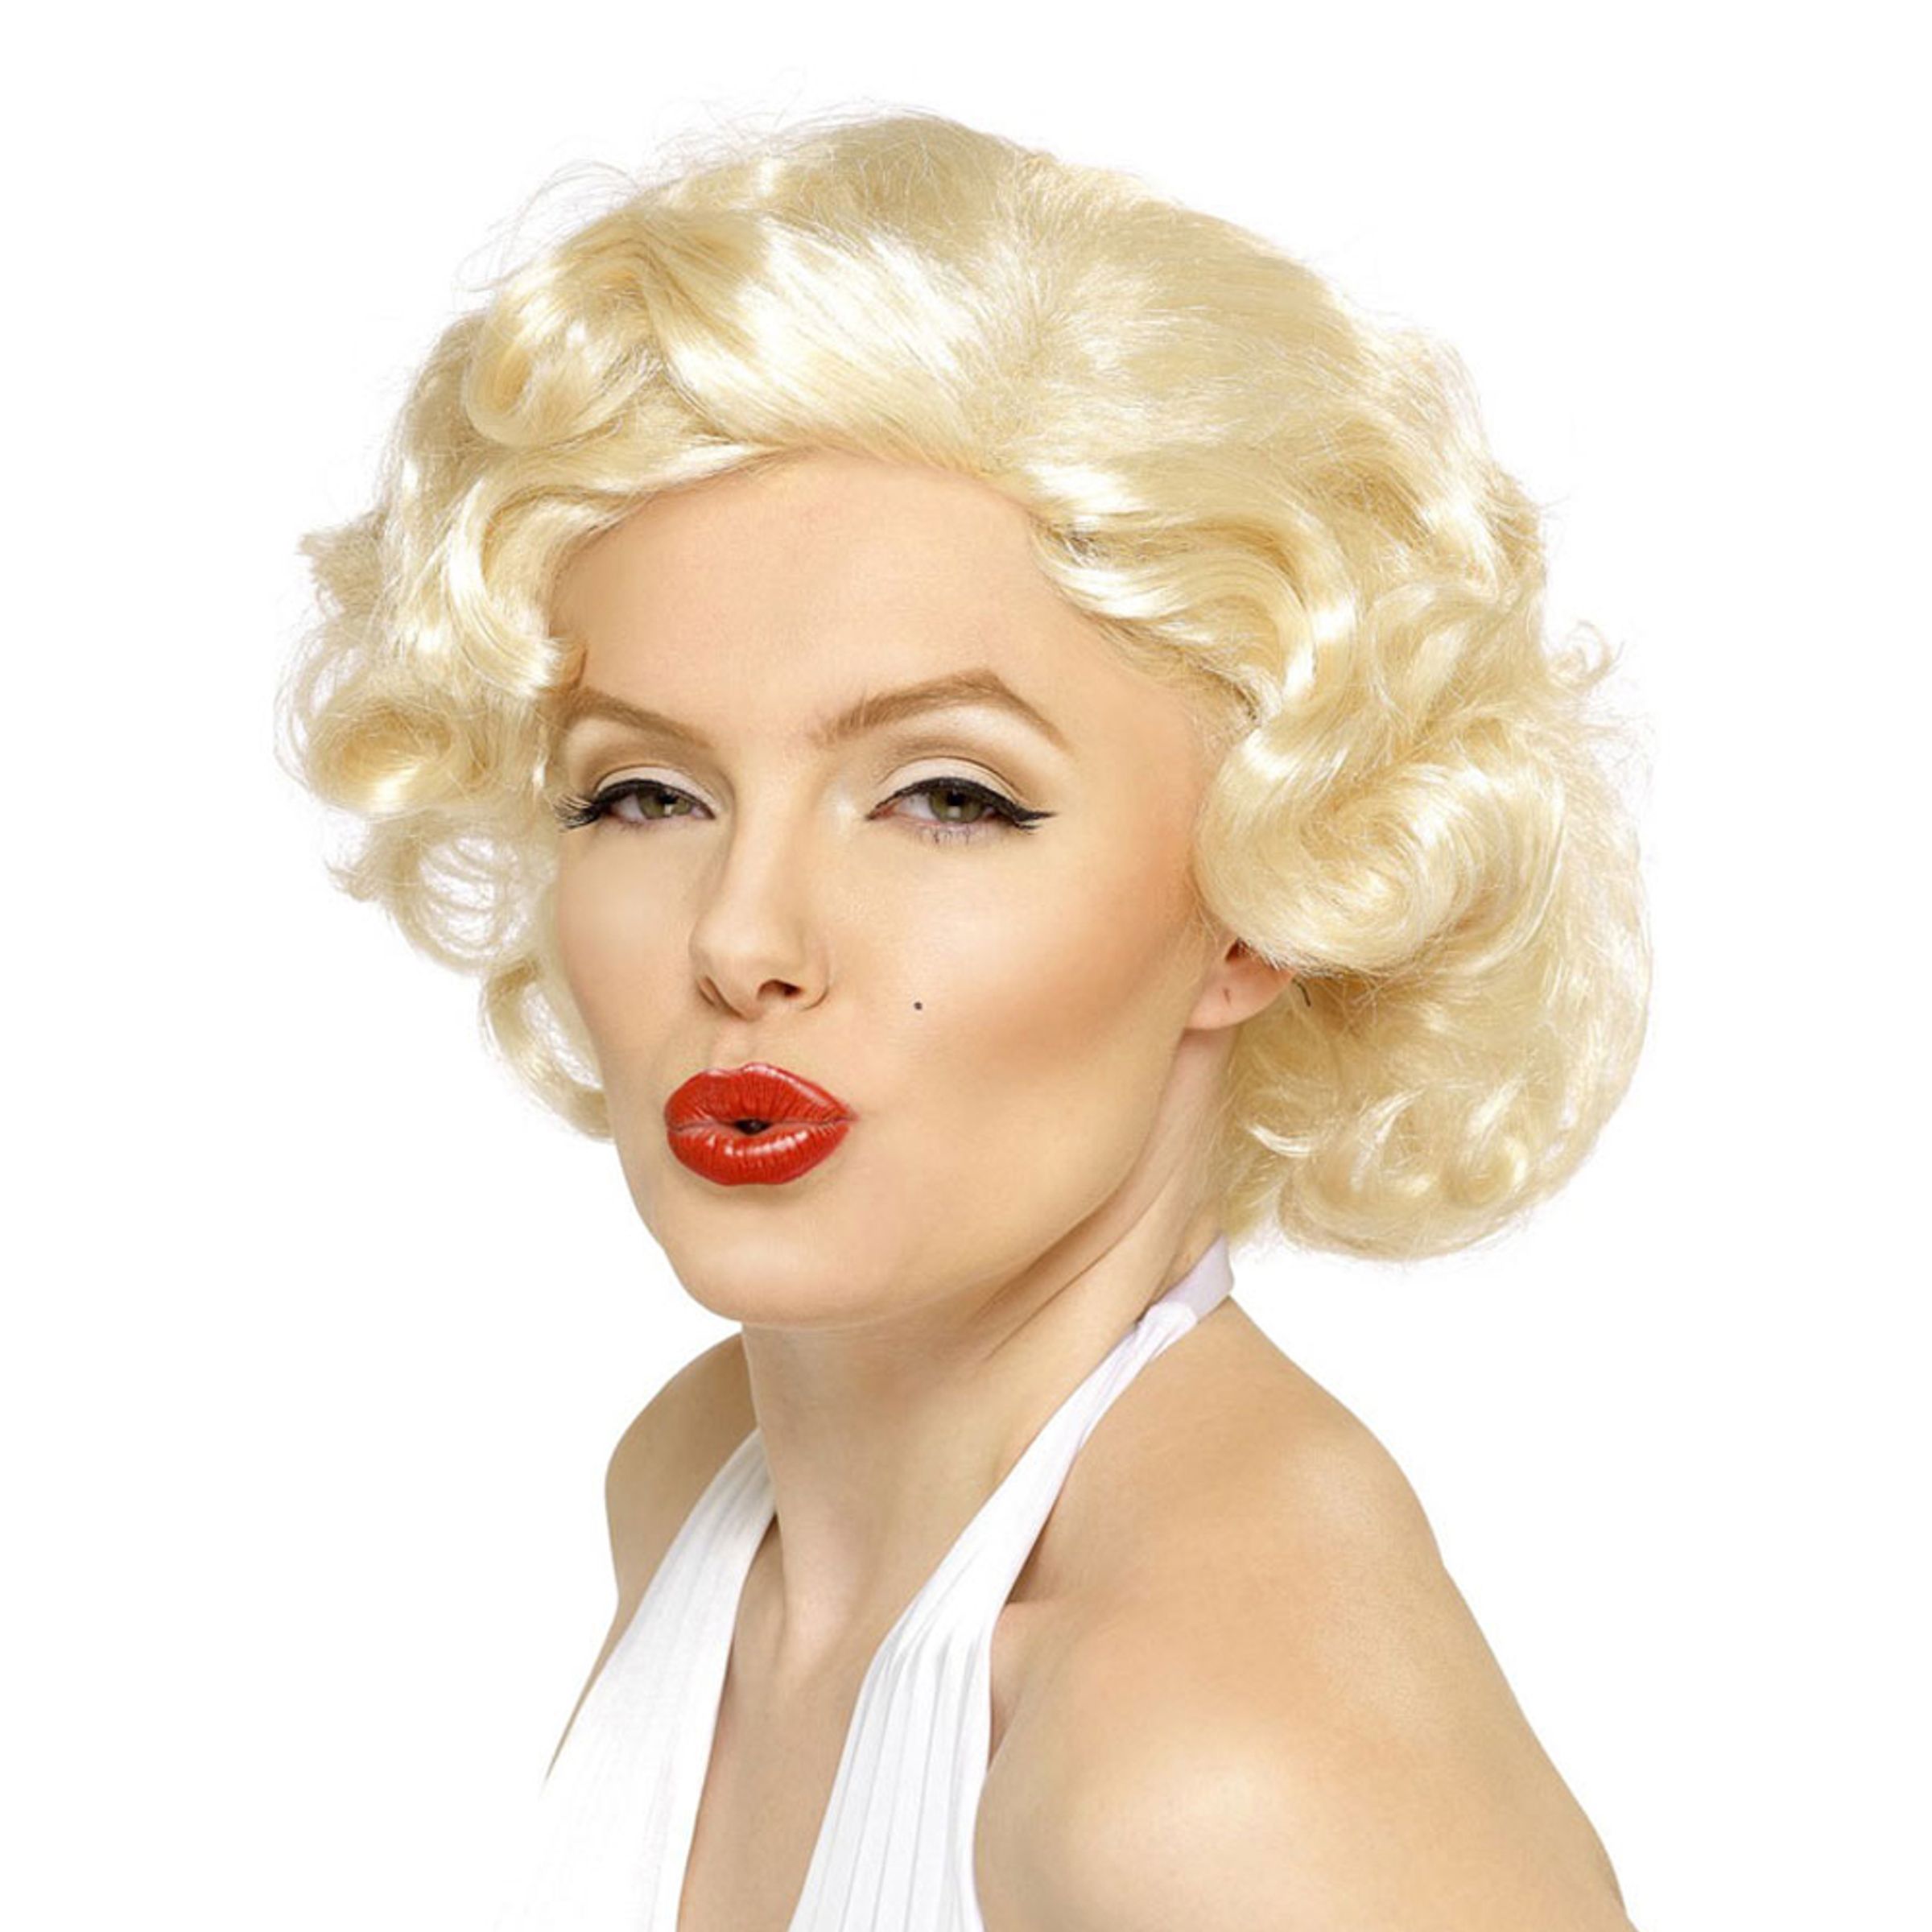 Marilyn Monroe Budget Peruk - One size